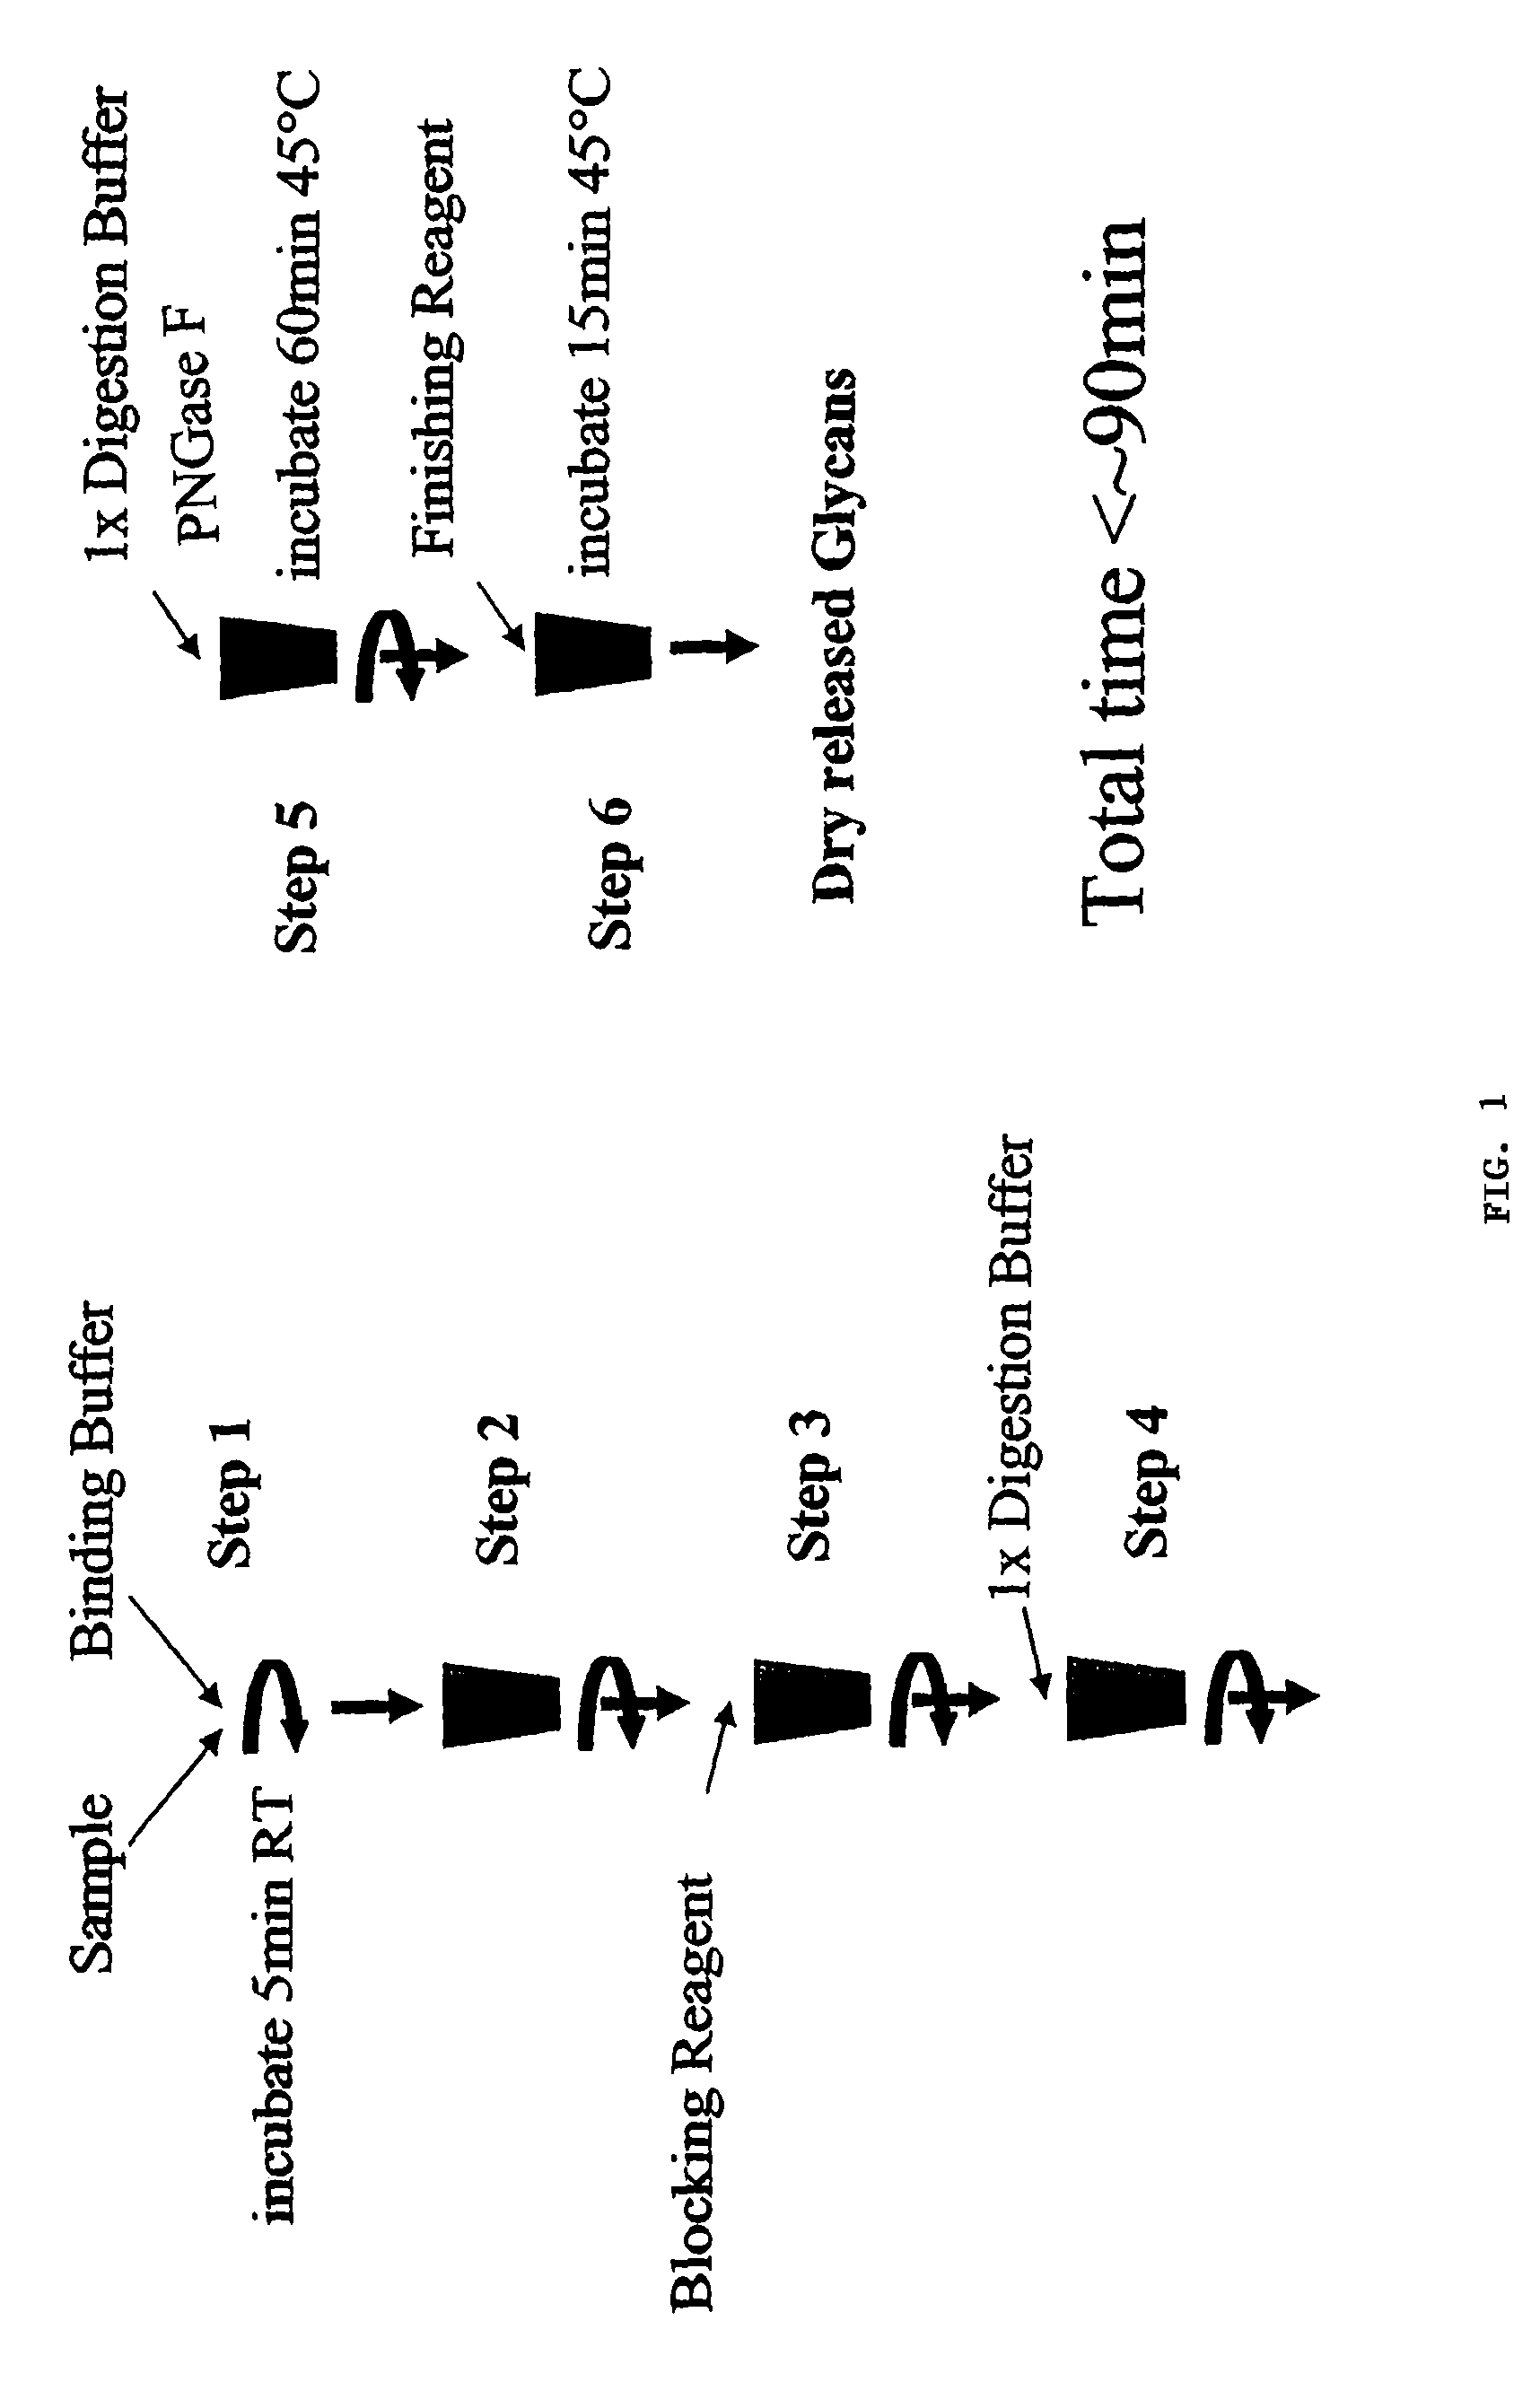 Rapid deglycosylation of glycoproteins